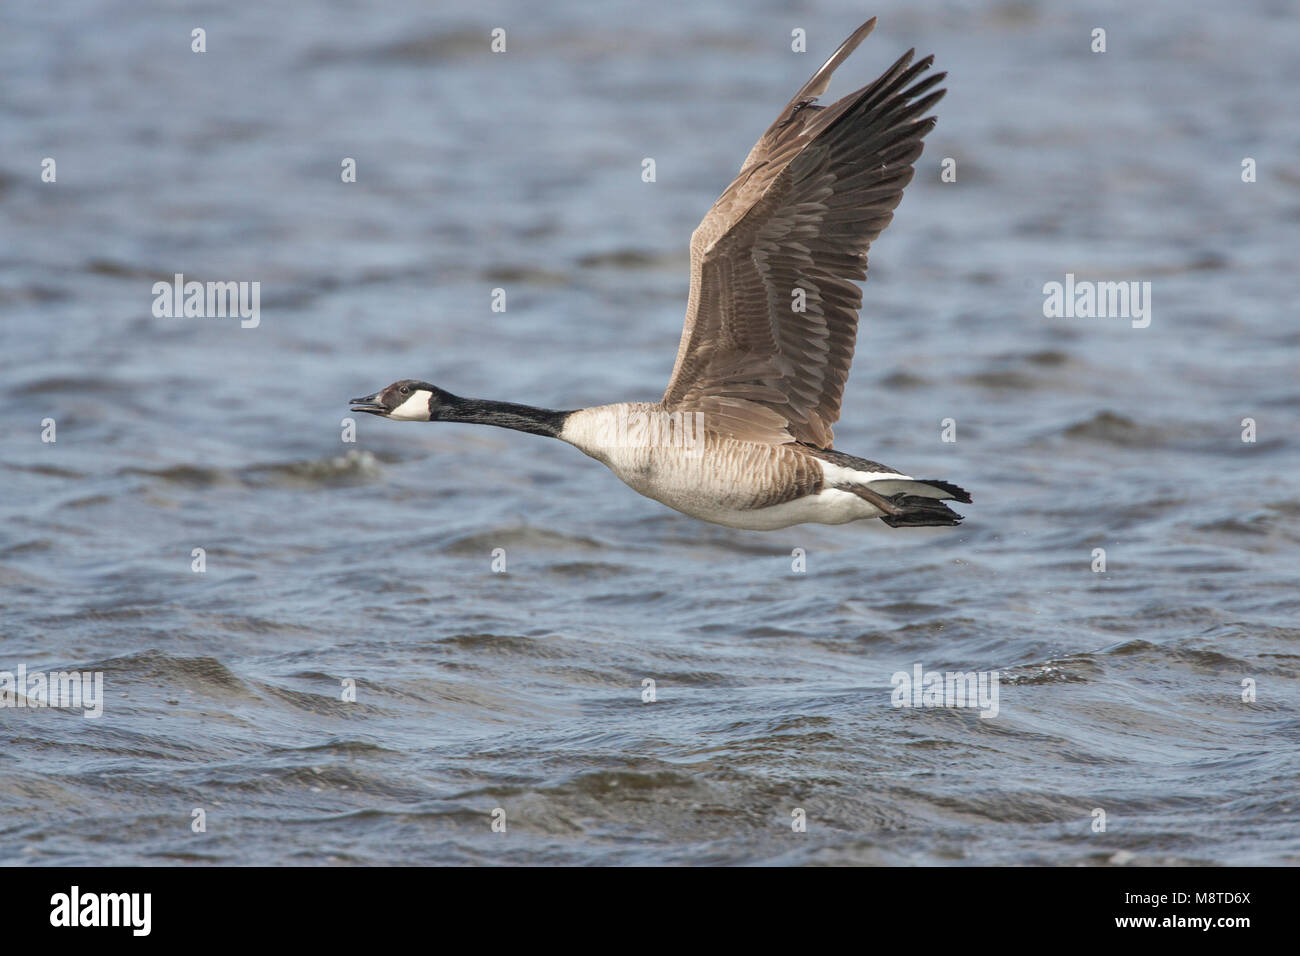 Canadese Gans vliegend boven l'eau ; Le Canada Goose flying over water Banque D'Images